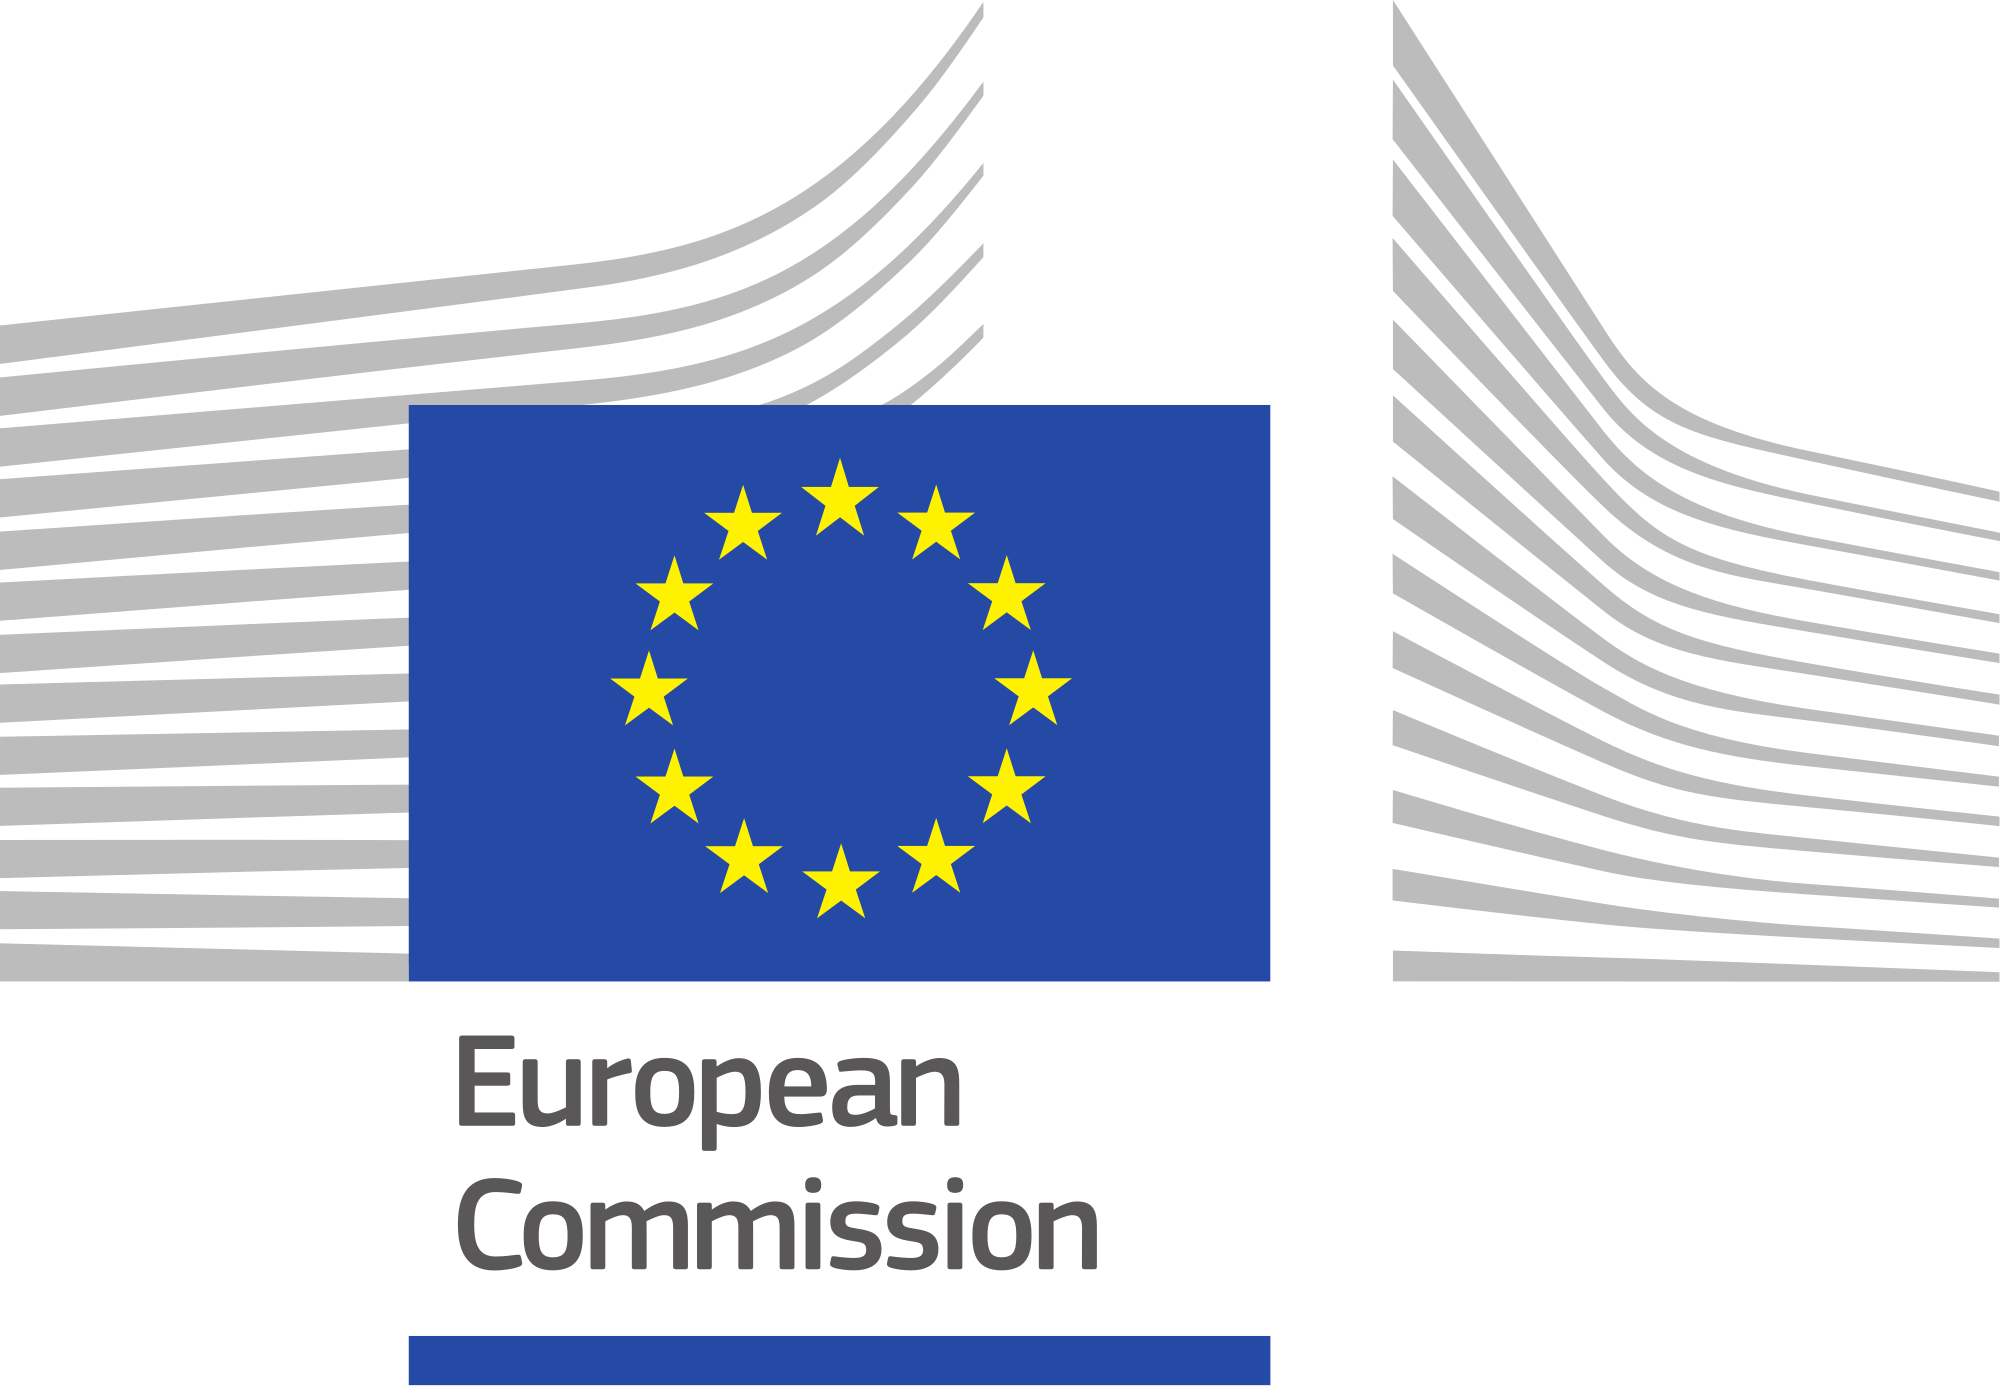 European_Commission logo.png